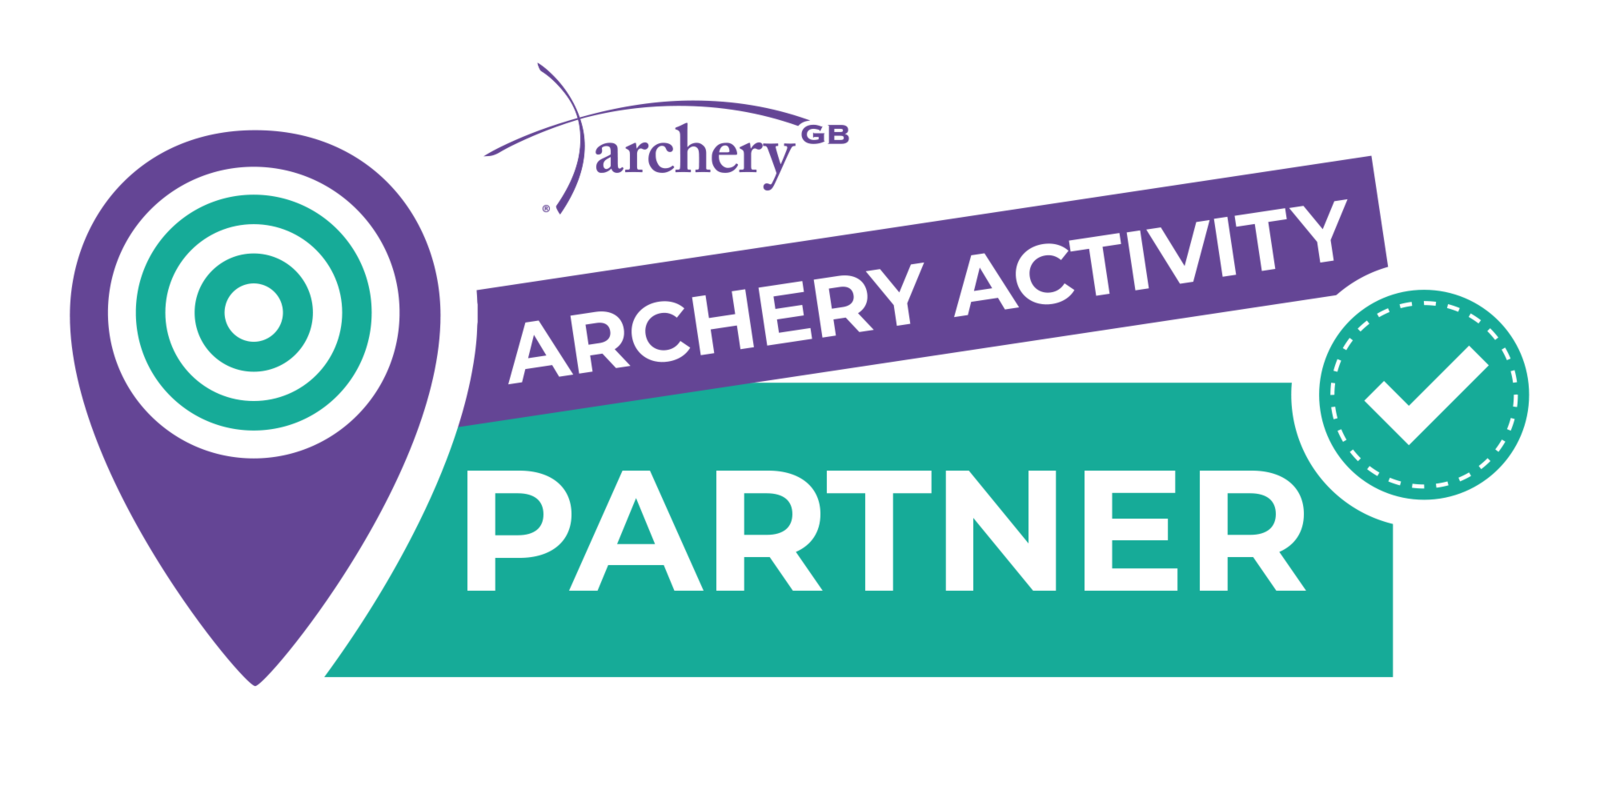 Archery activity partners logo